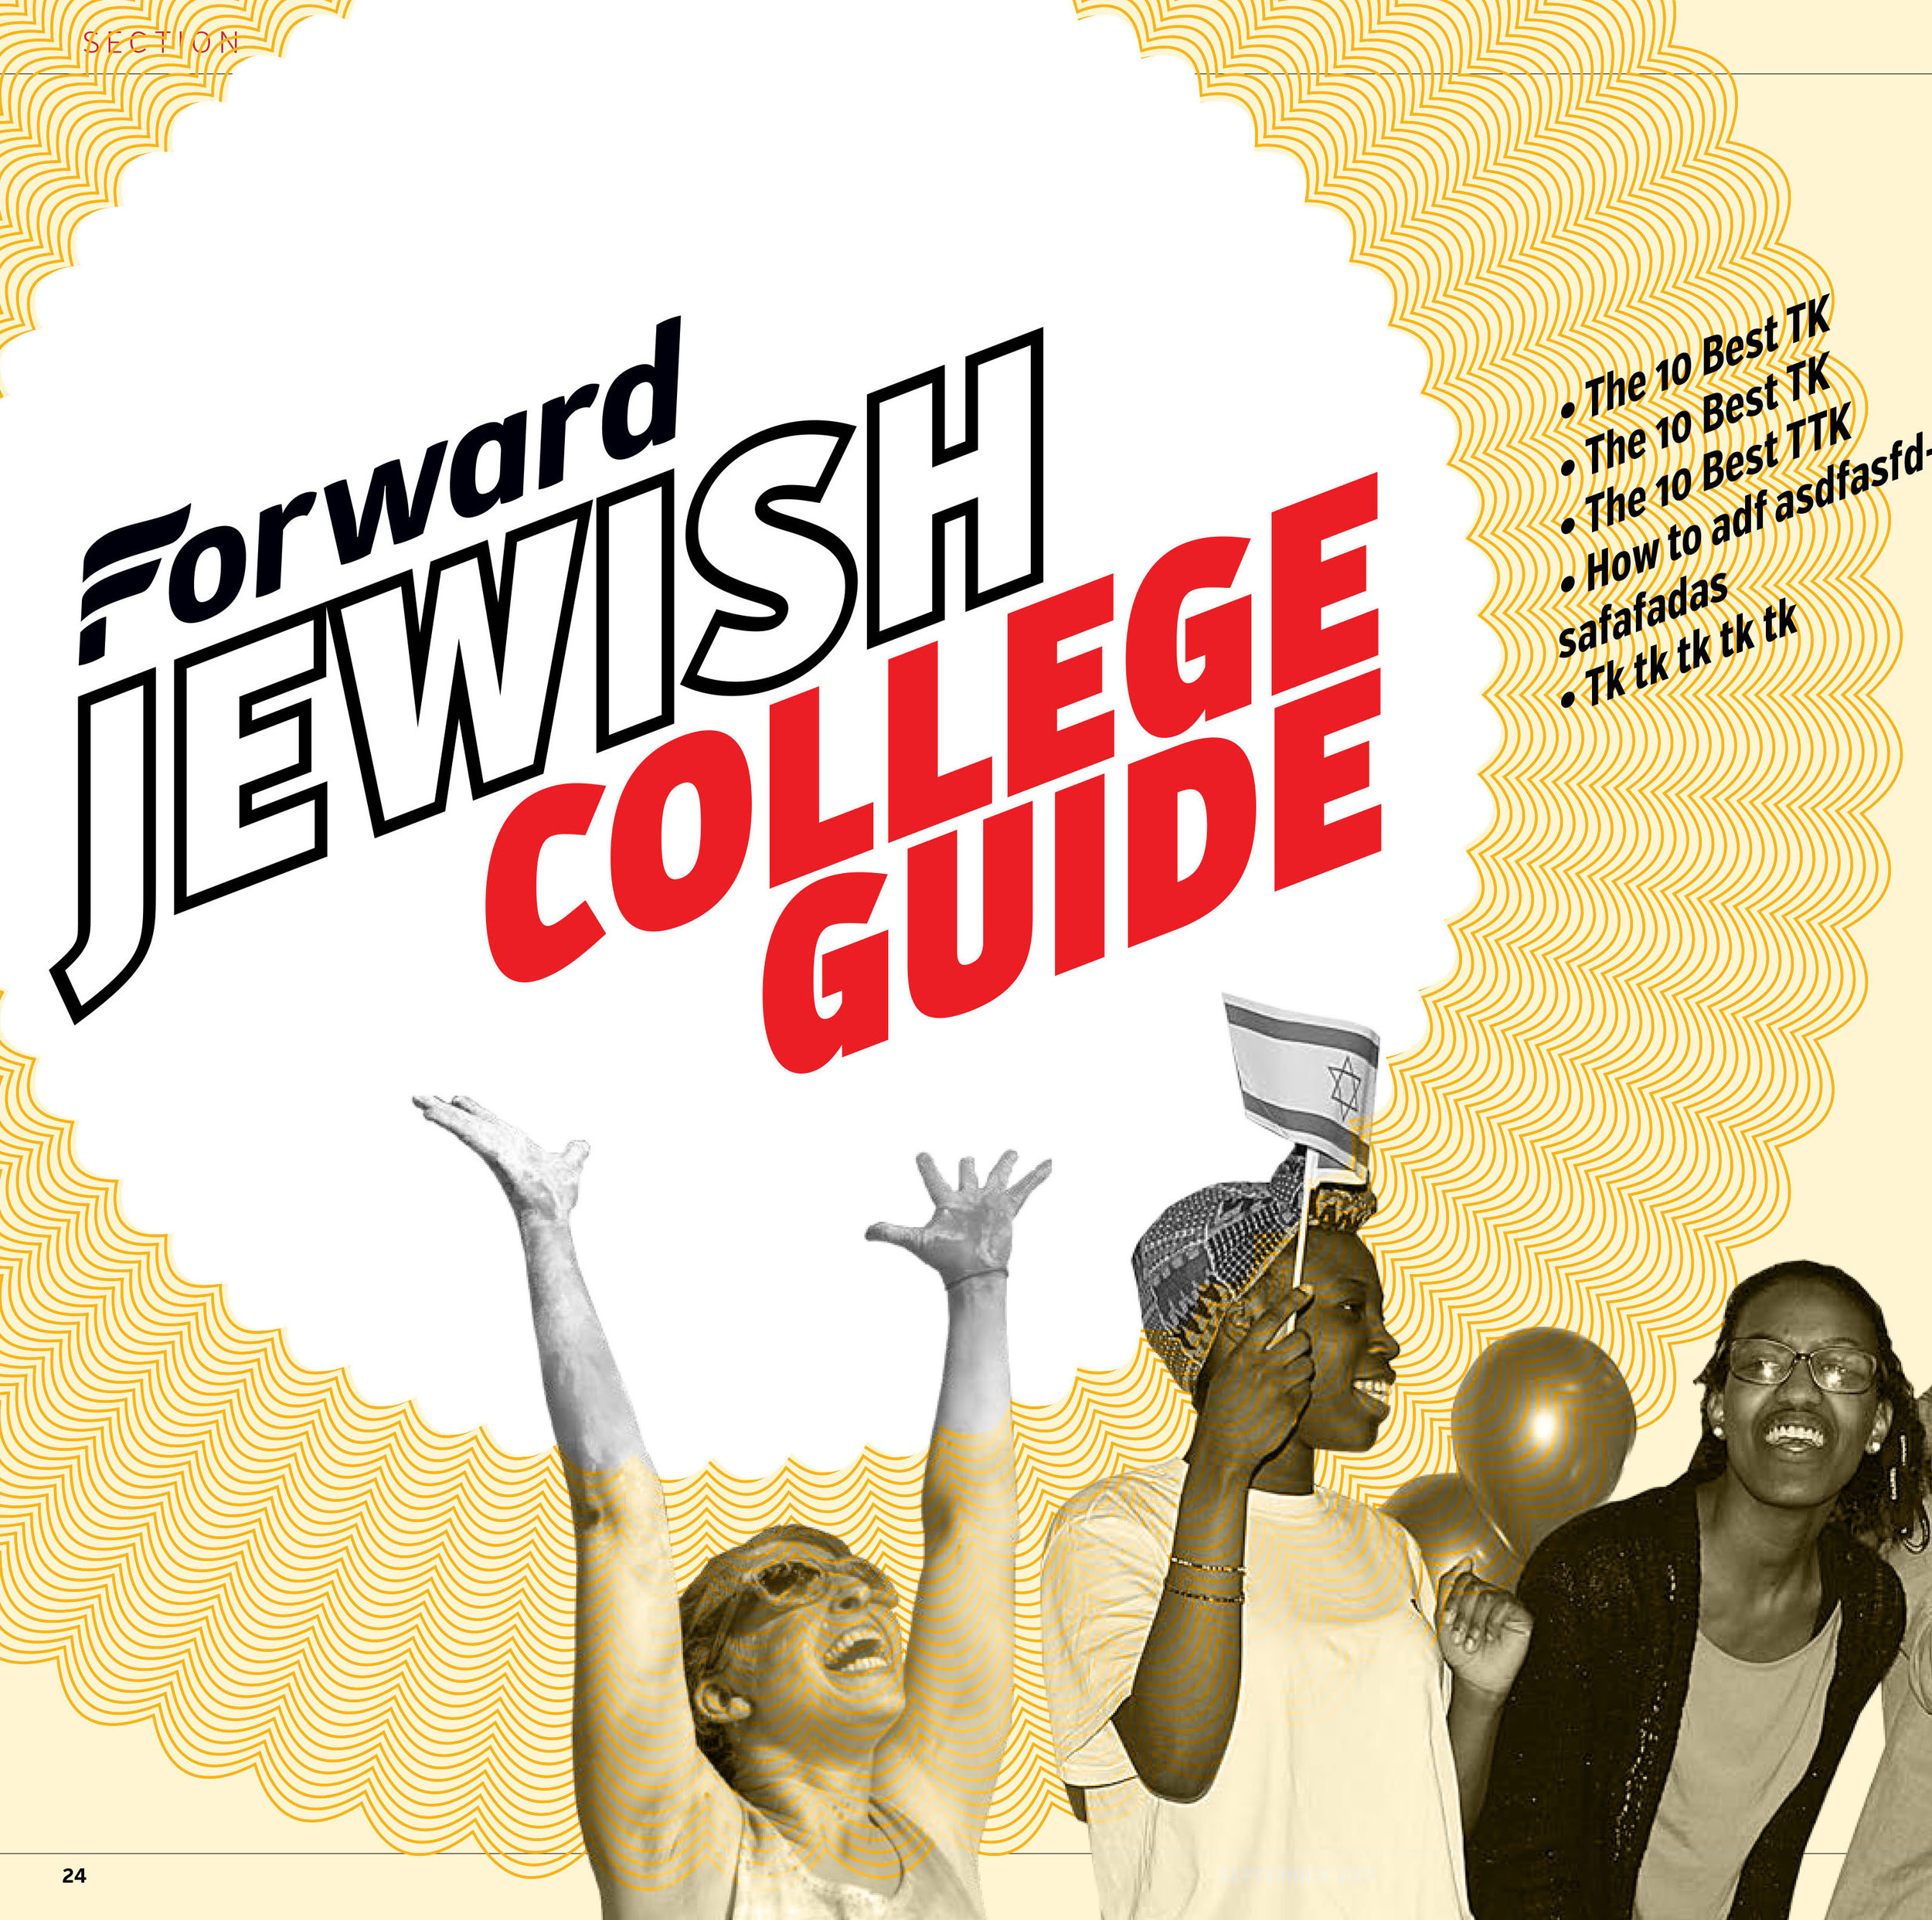 College Guide-1 copy.jpg